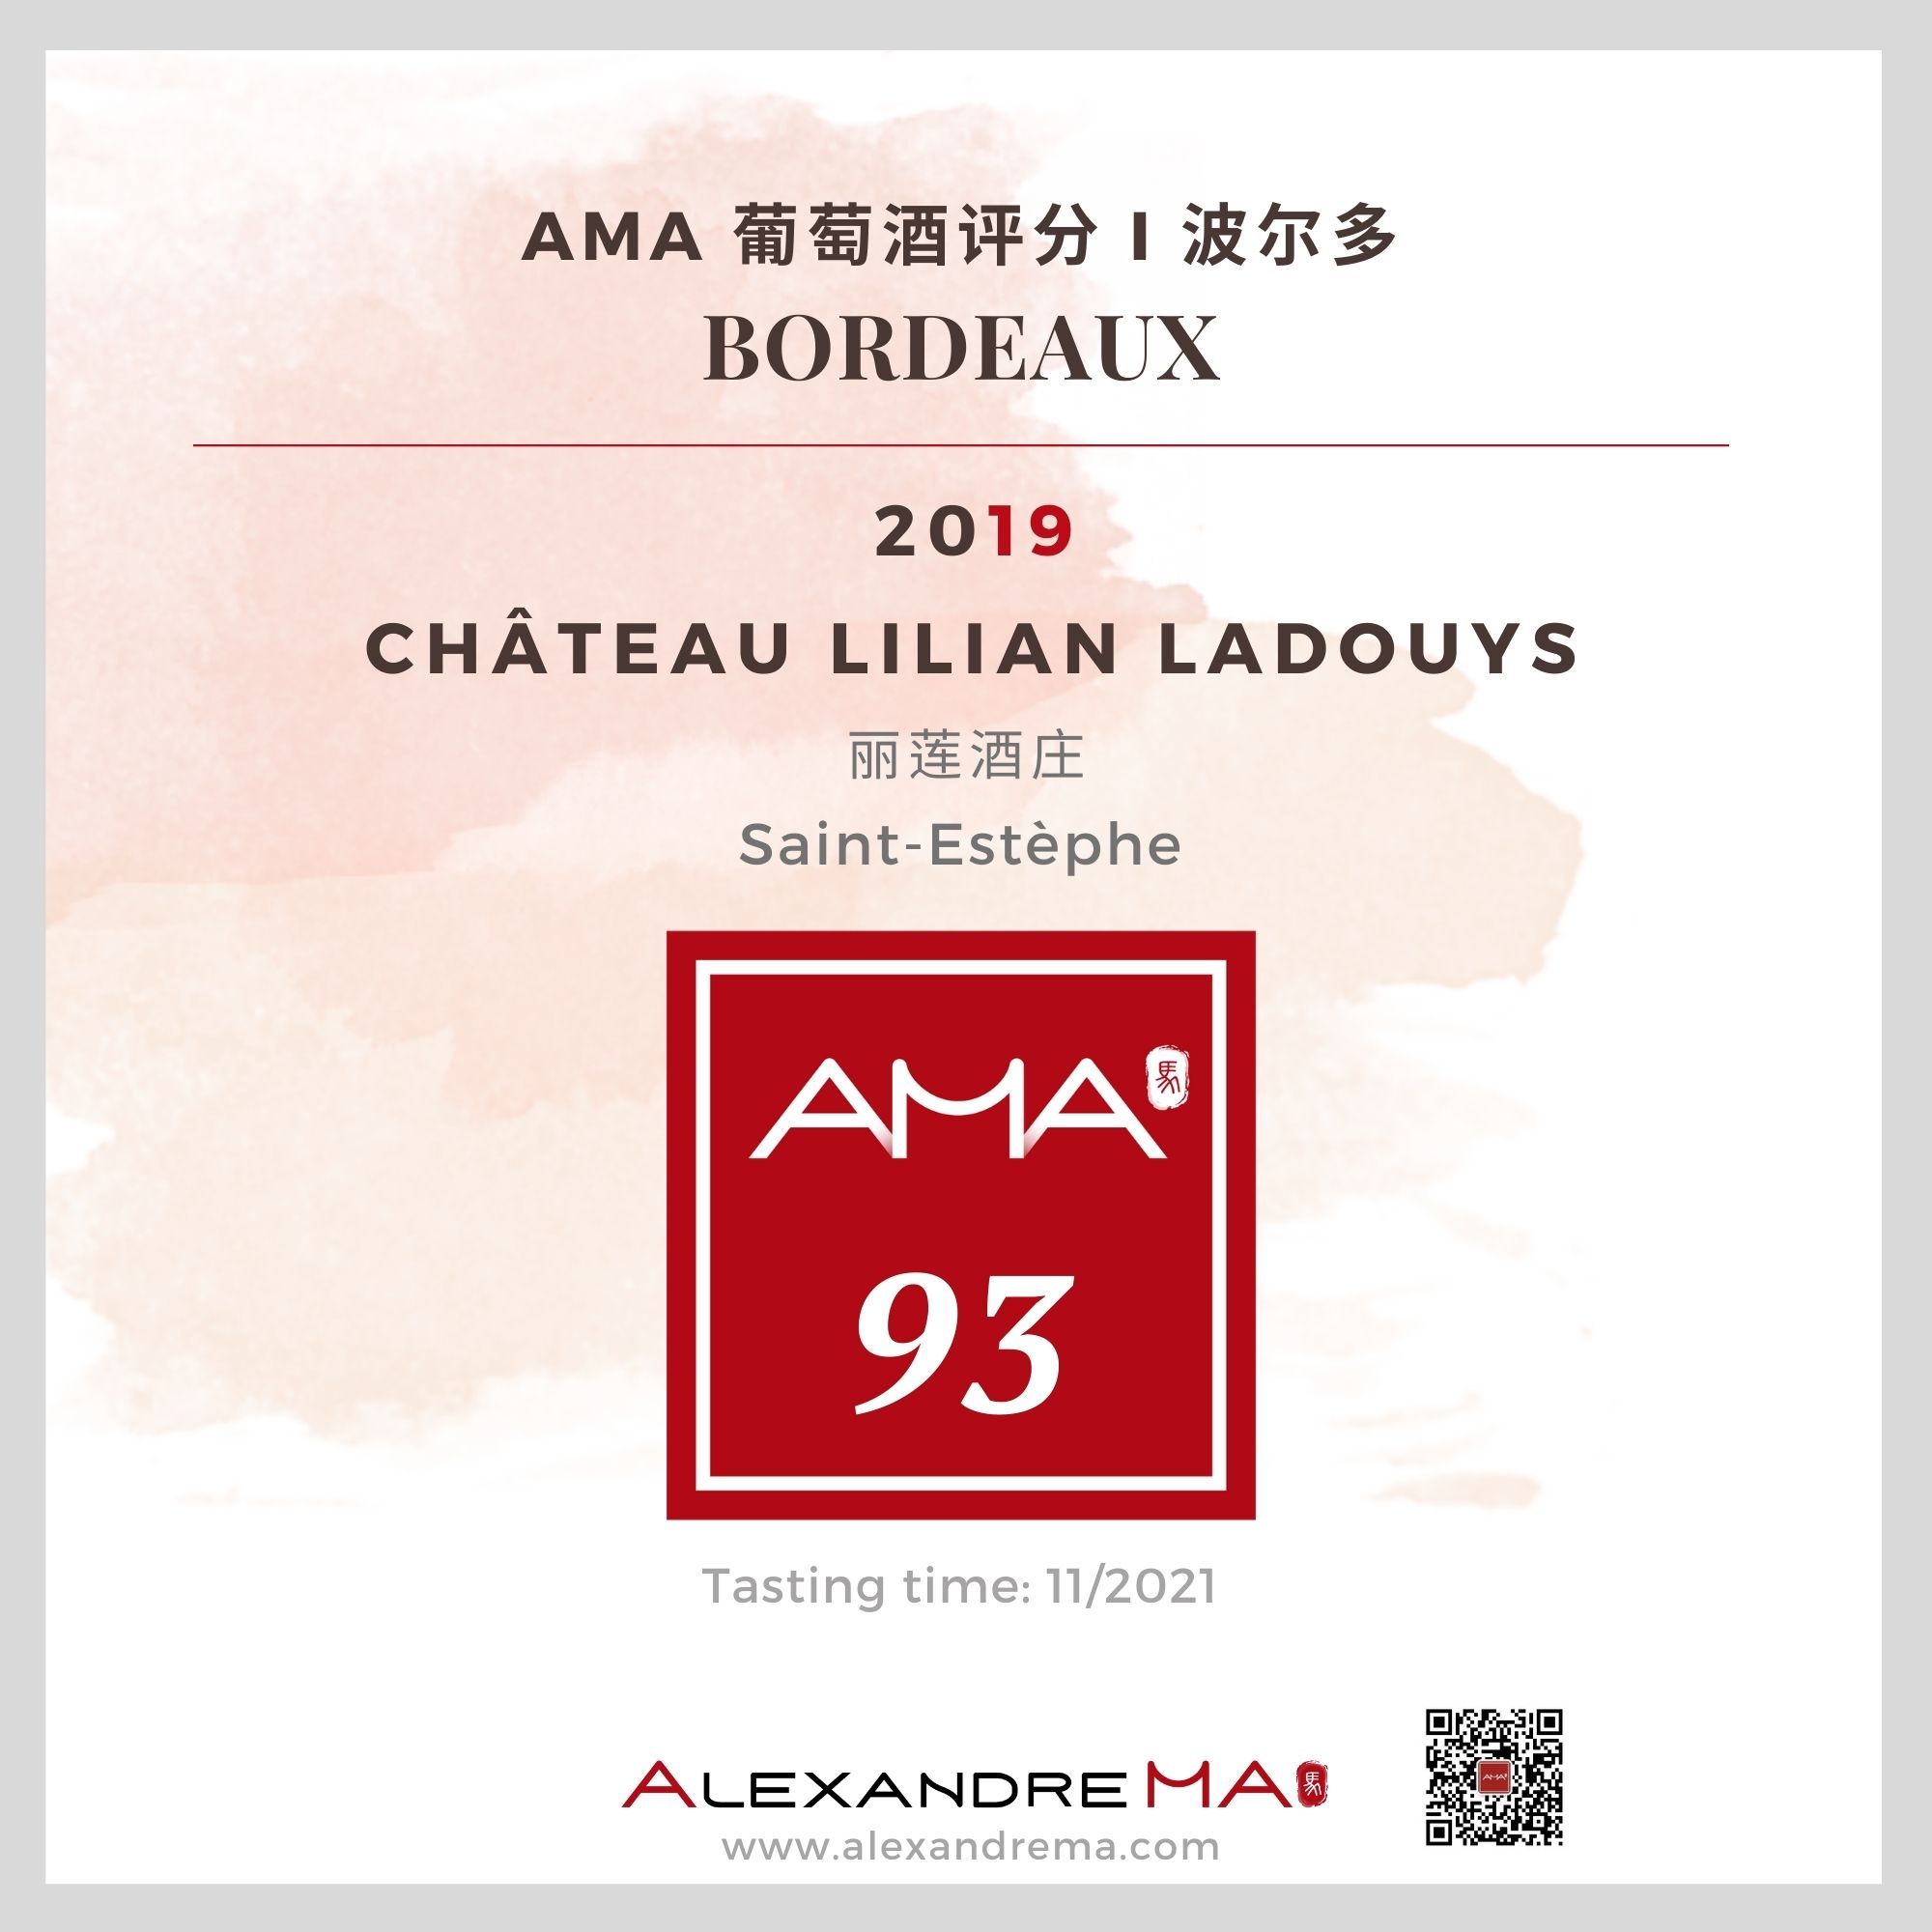 Château Lilian Ladouys 2019 丽莲酒庄 - Alexandre Ma